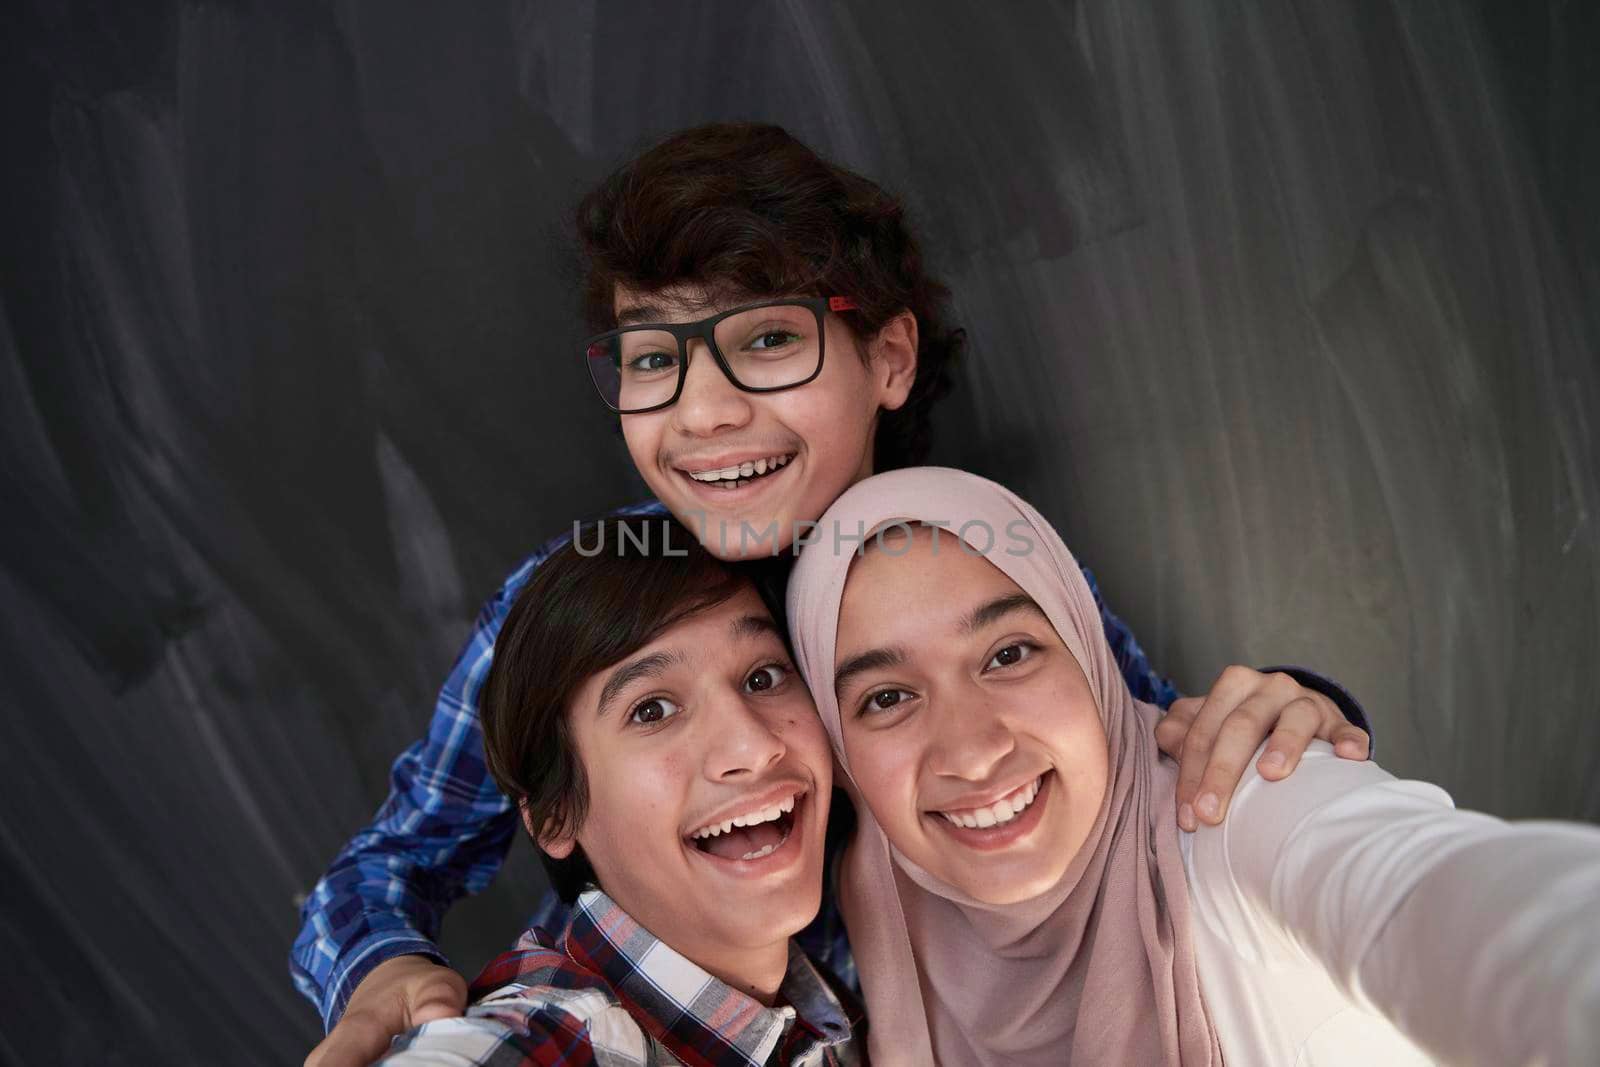 group of arab teens taking selfie photo on smart phone with black chalkboard in background